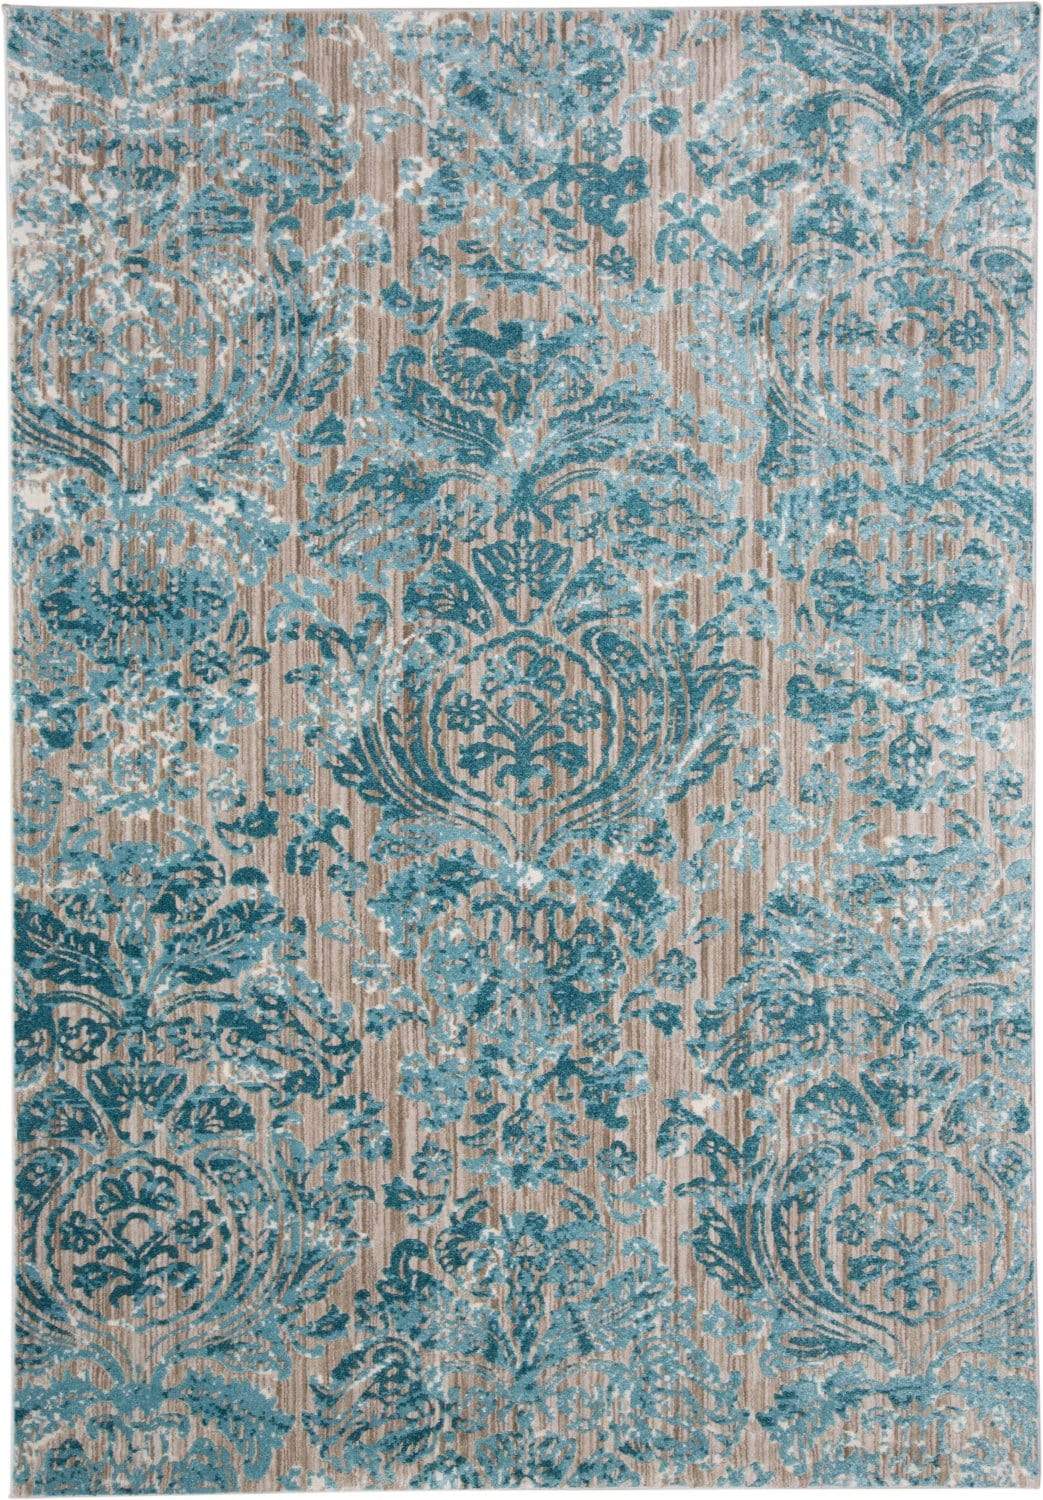 Feizy Feizy Keats Scroll Print Textured Rug - Available in 8 Sizes - Capri Ocean Blue 2'-2" x 4' 6523475FAQU000A22